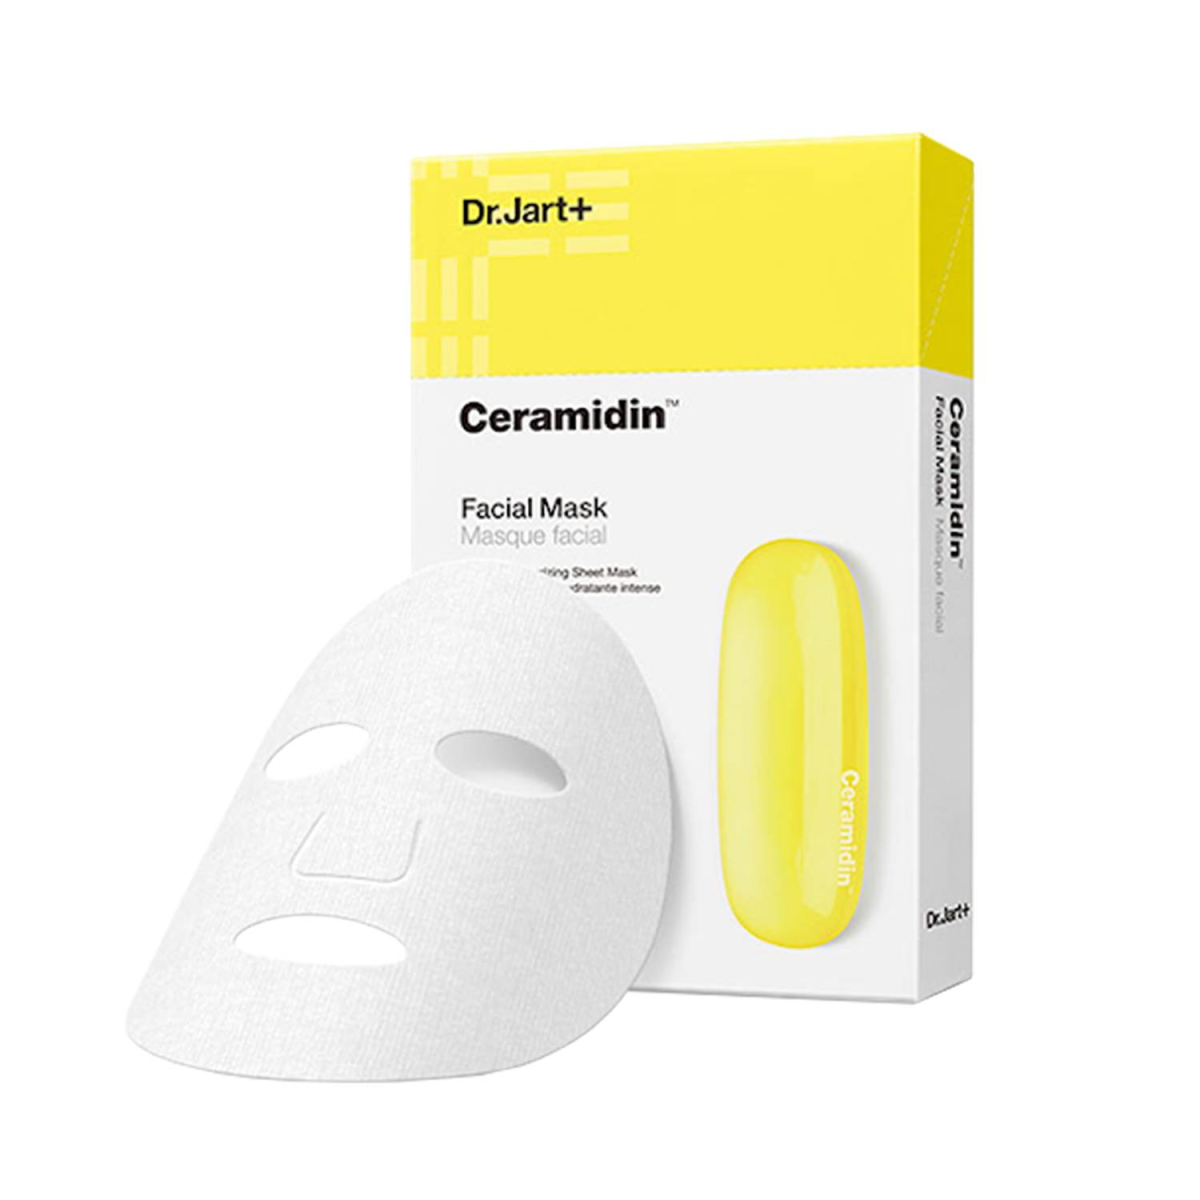 Ceramidin Facial Barrier Face Sheet Mask by Dr.Jart+ (5pcs/pack)